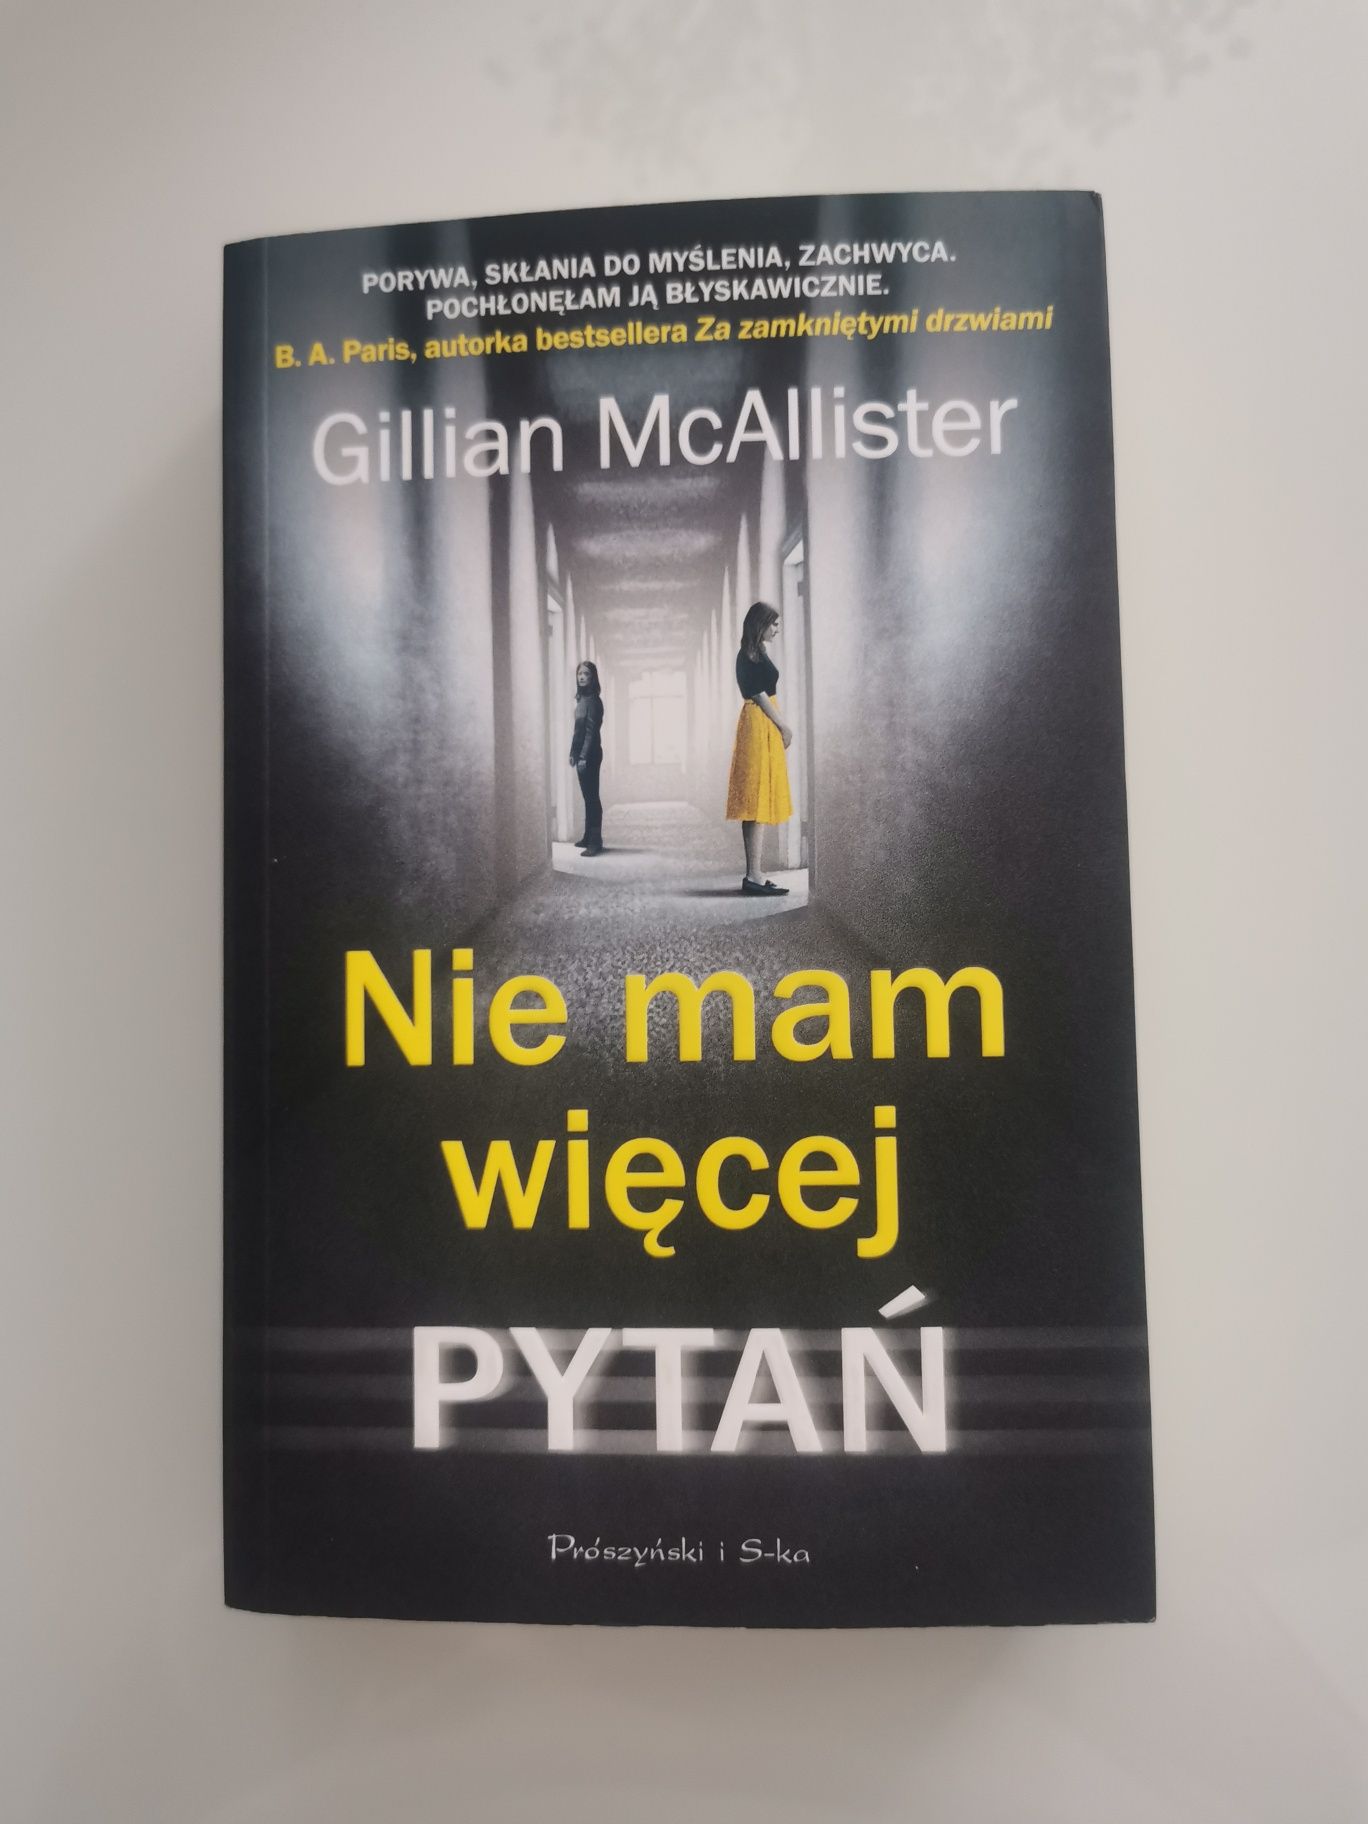 Książka, Nie mam więcej pytań, Gilliam McAllister, thriller psycholog.